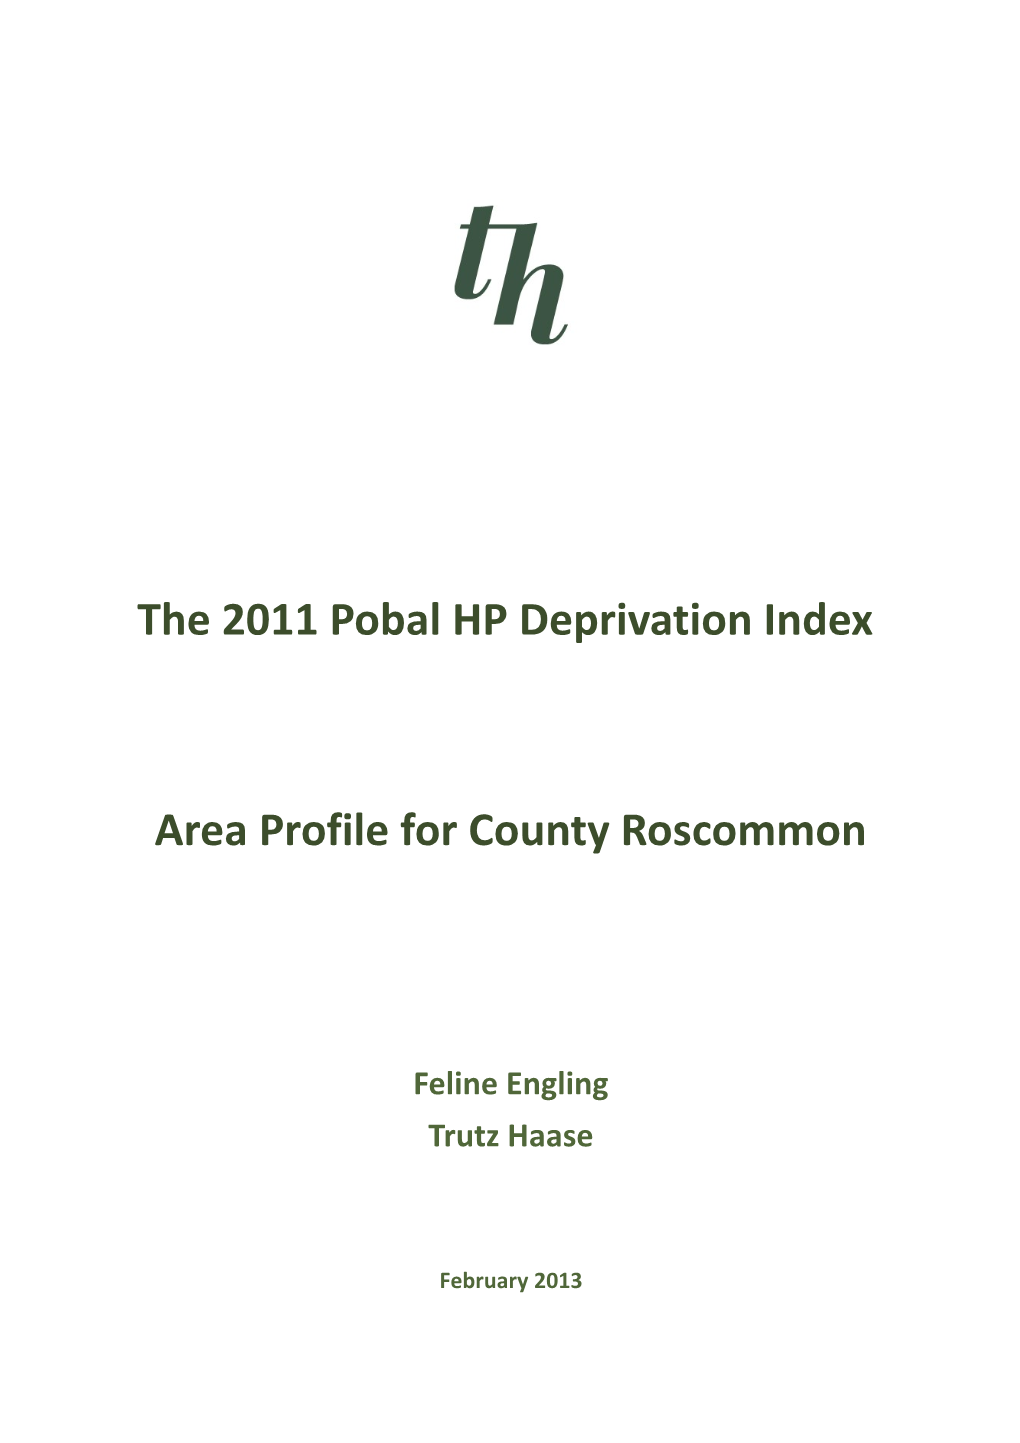 Area Profile for County Roscommon